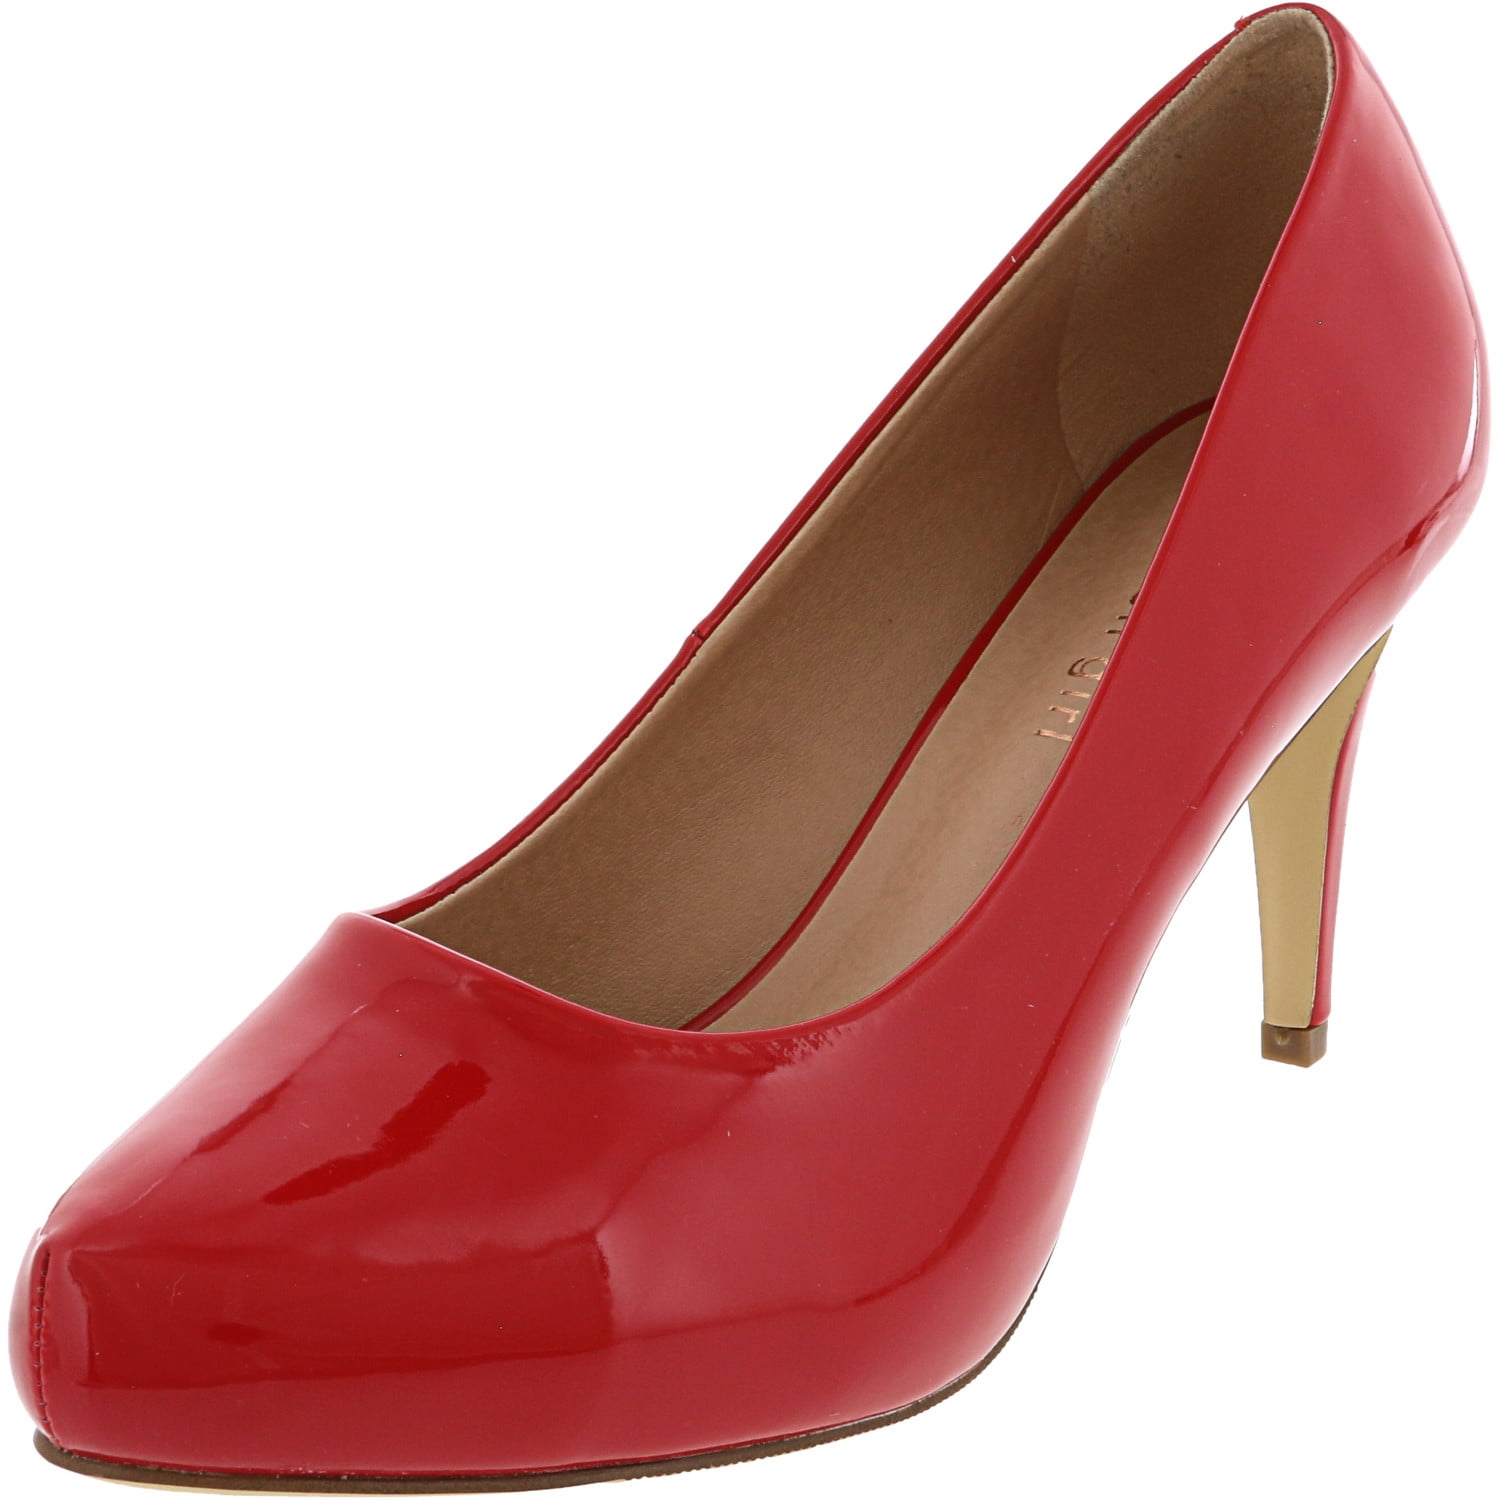 madden girl red heels